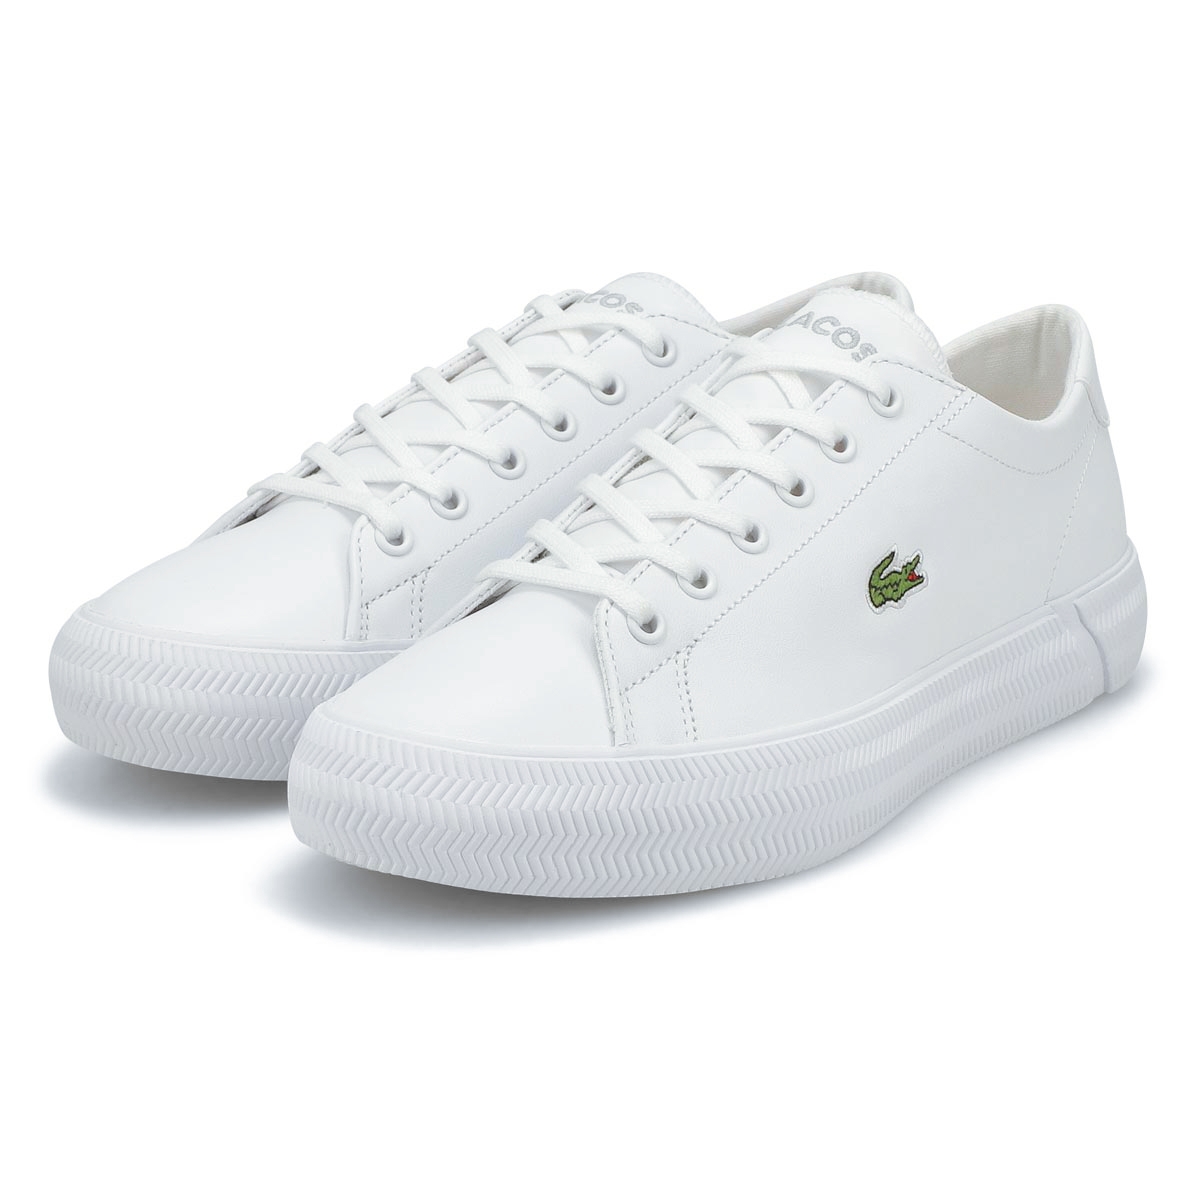 Women's Gripshot BL 21 1 Fashion Sneaker - White/White